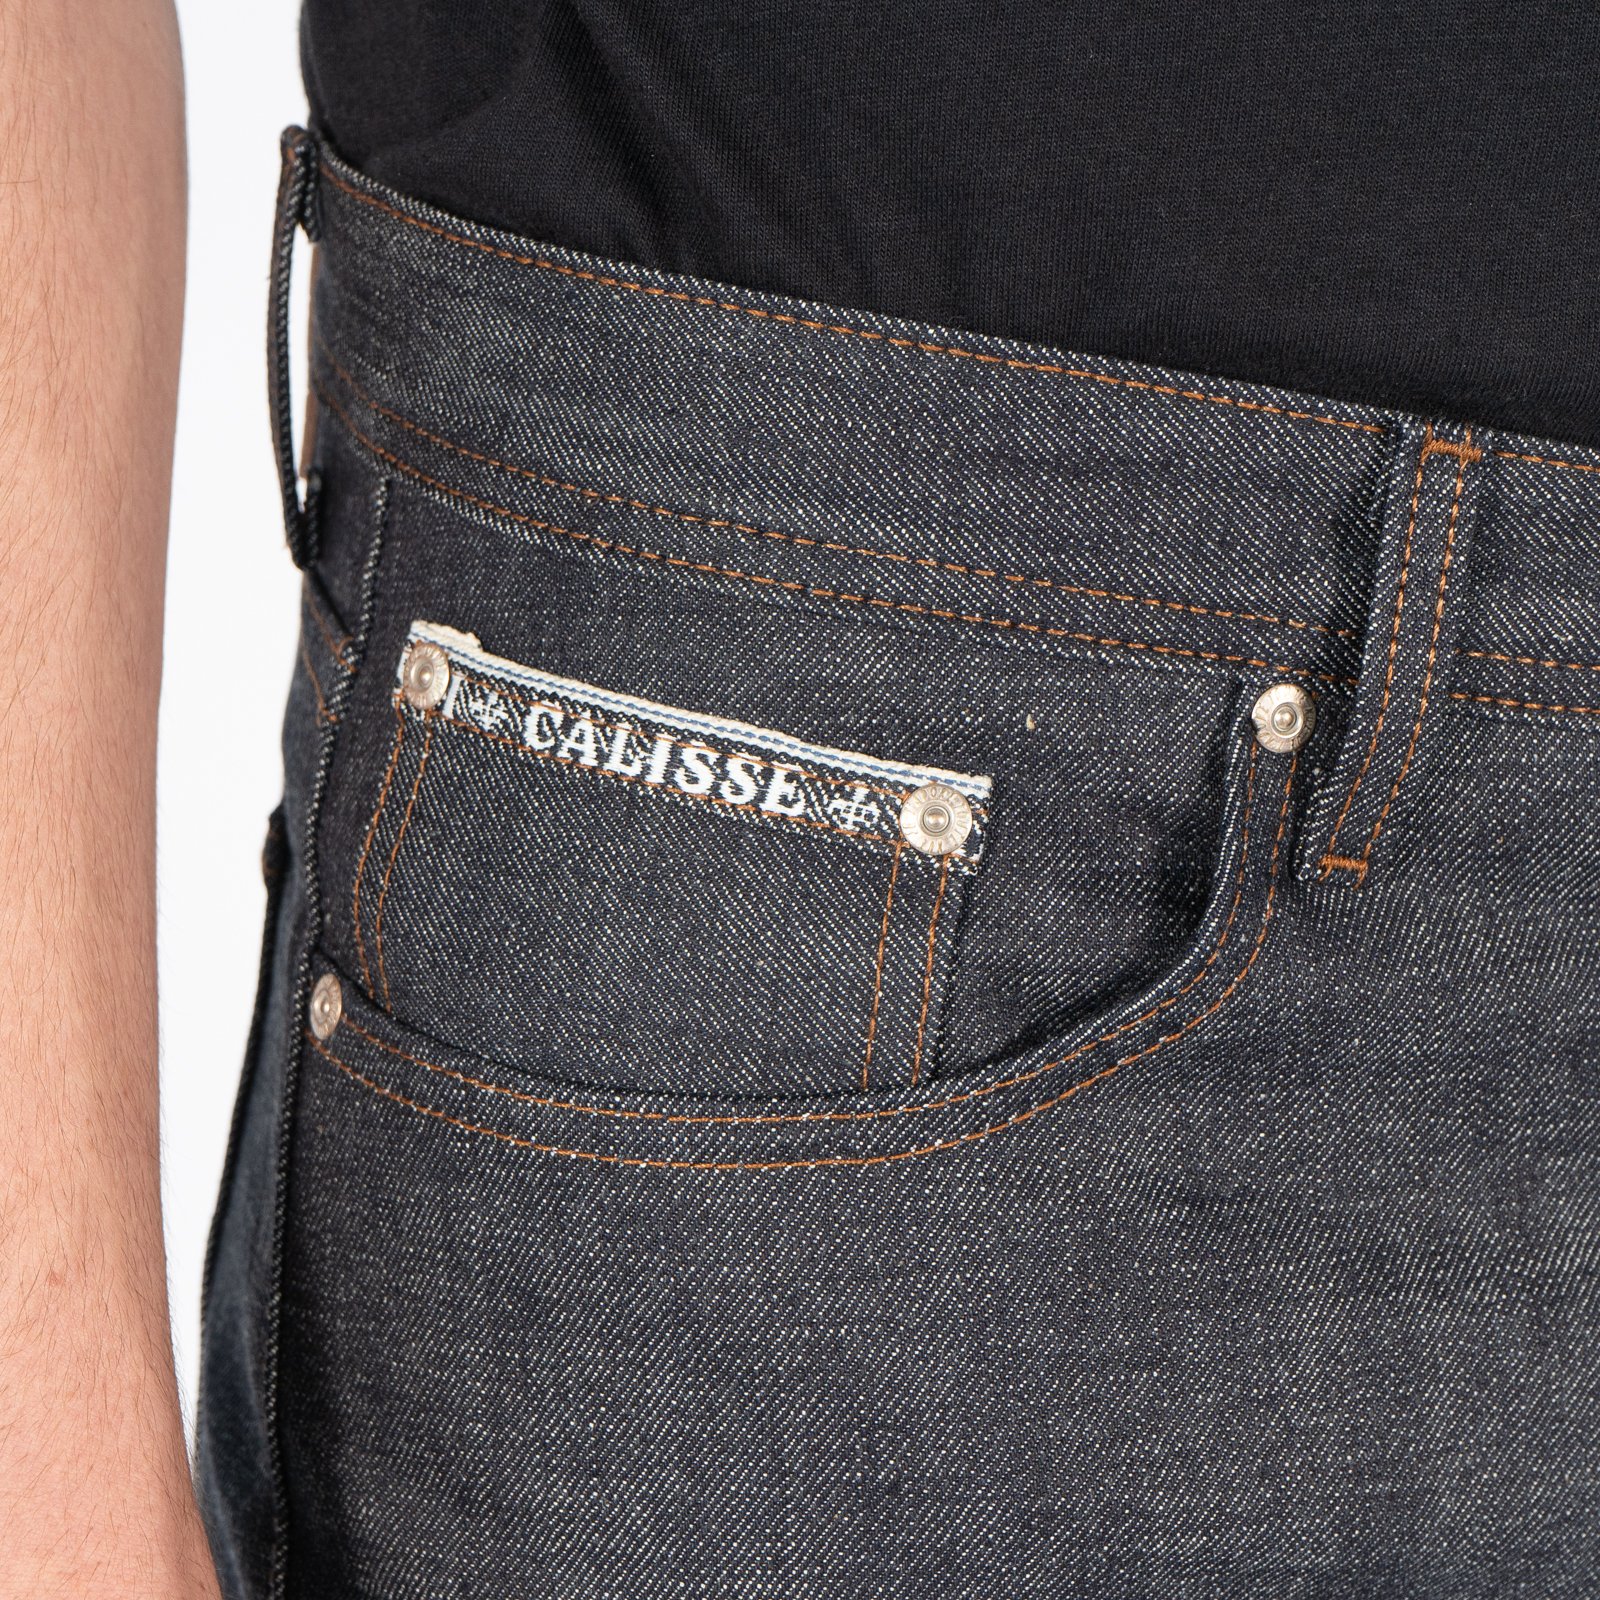  La Belle Province Selvedge jeans - coin pocket 